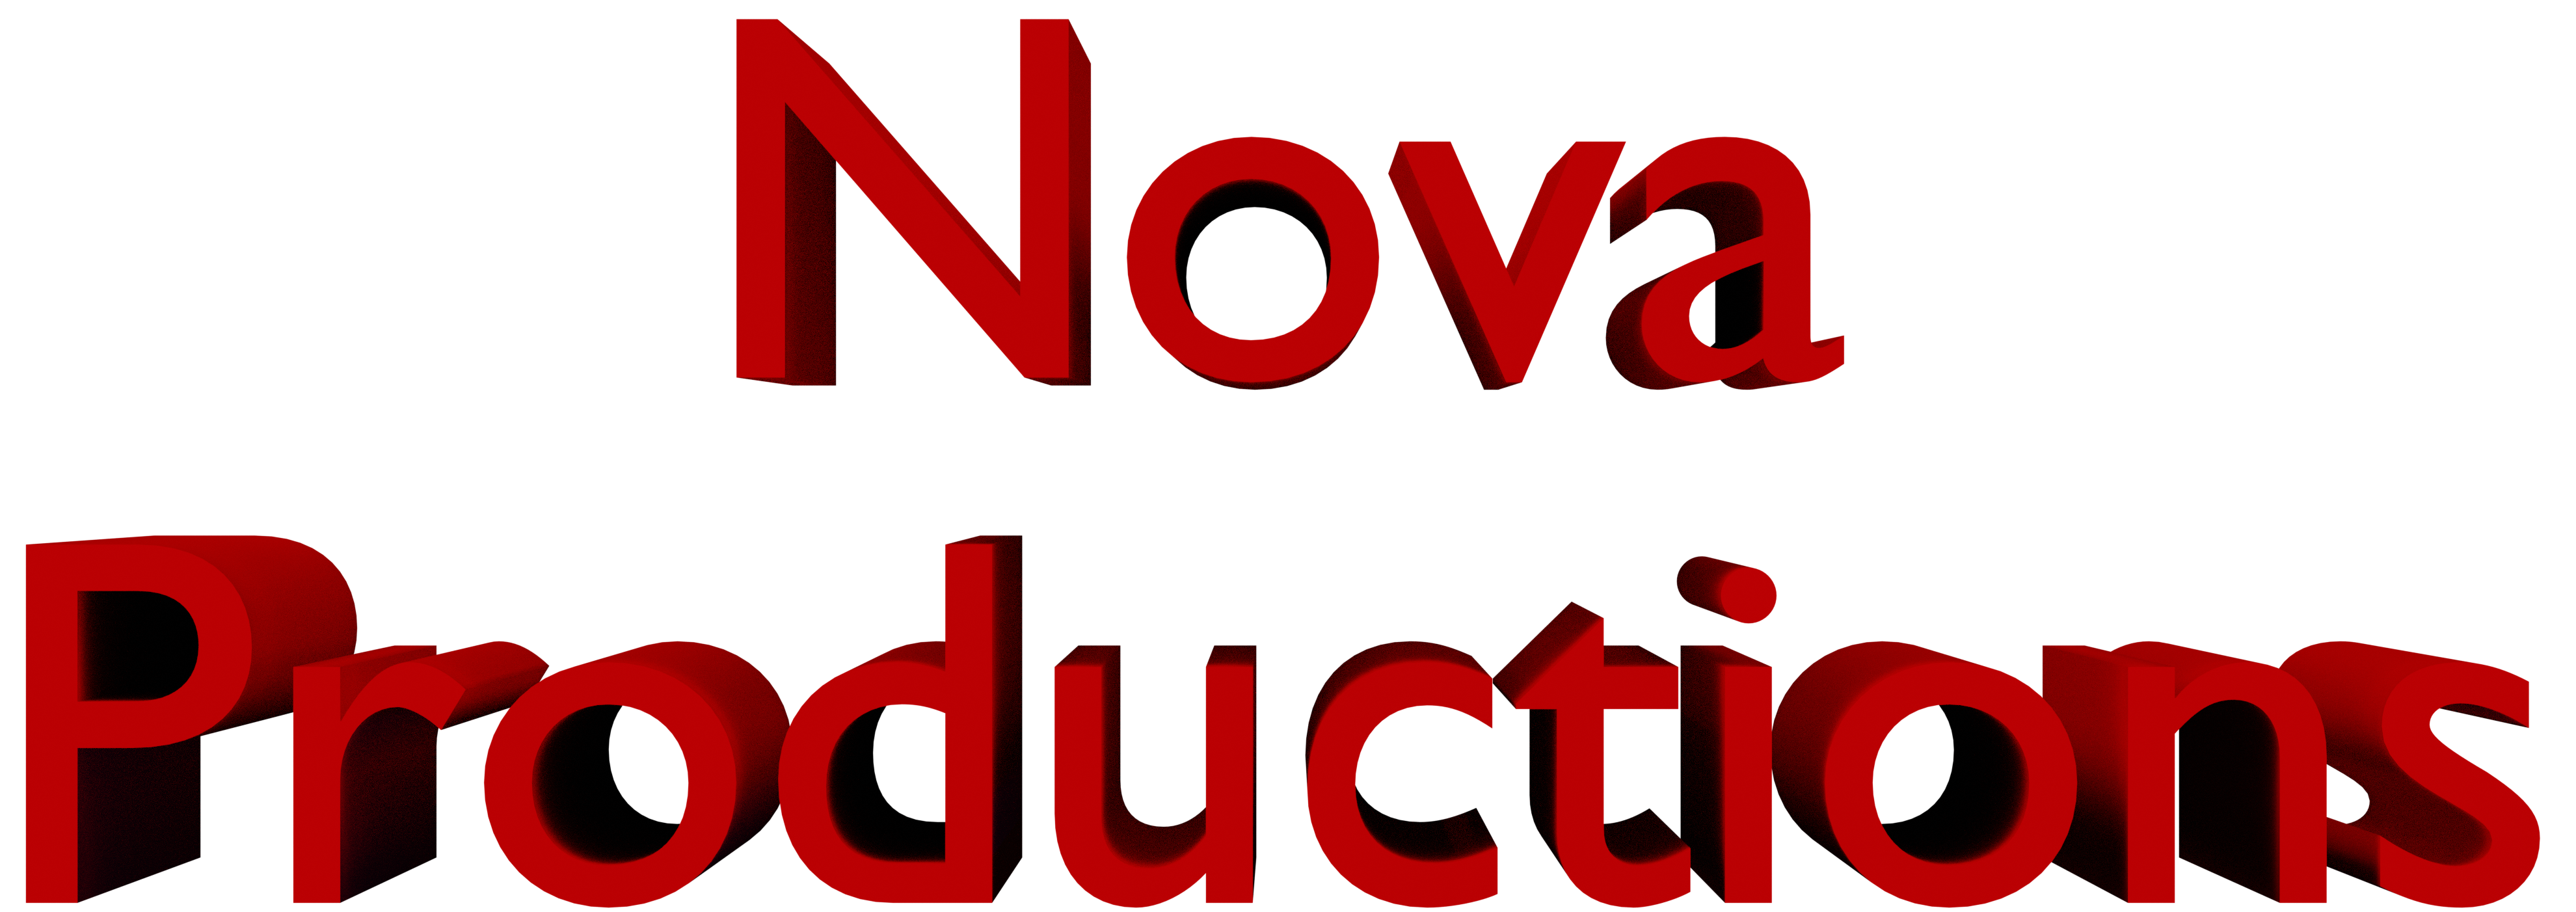 Nova Productions Banner Logo